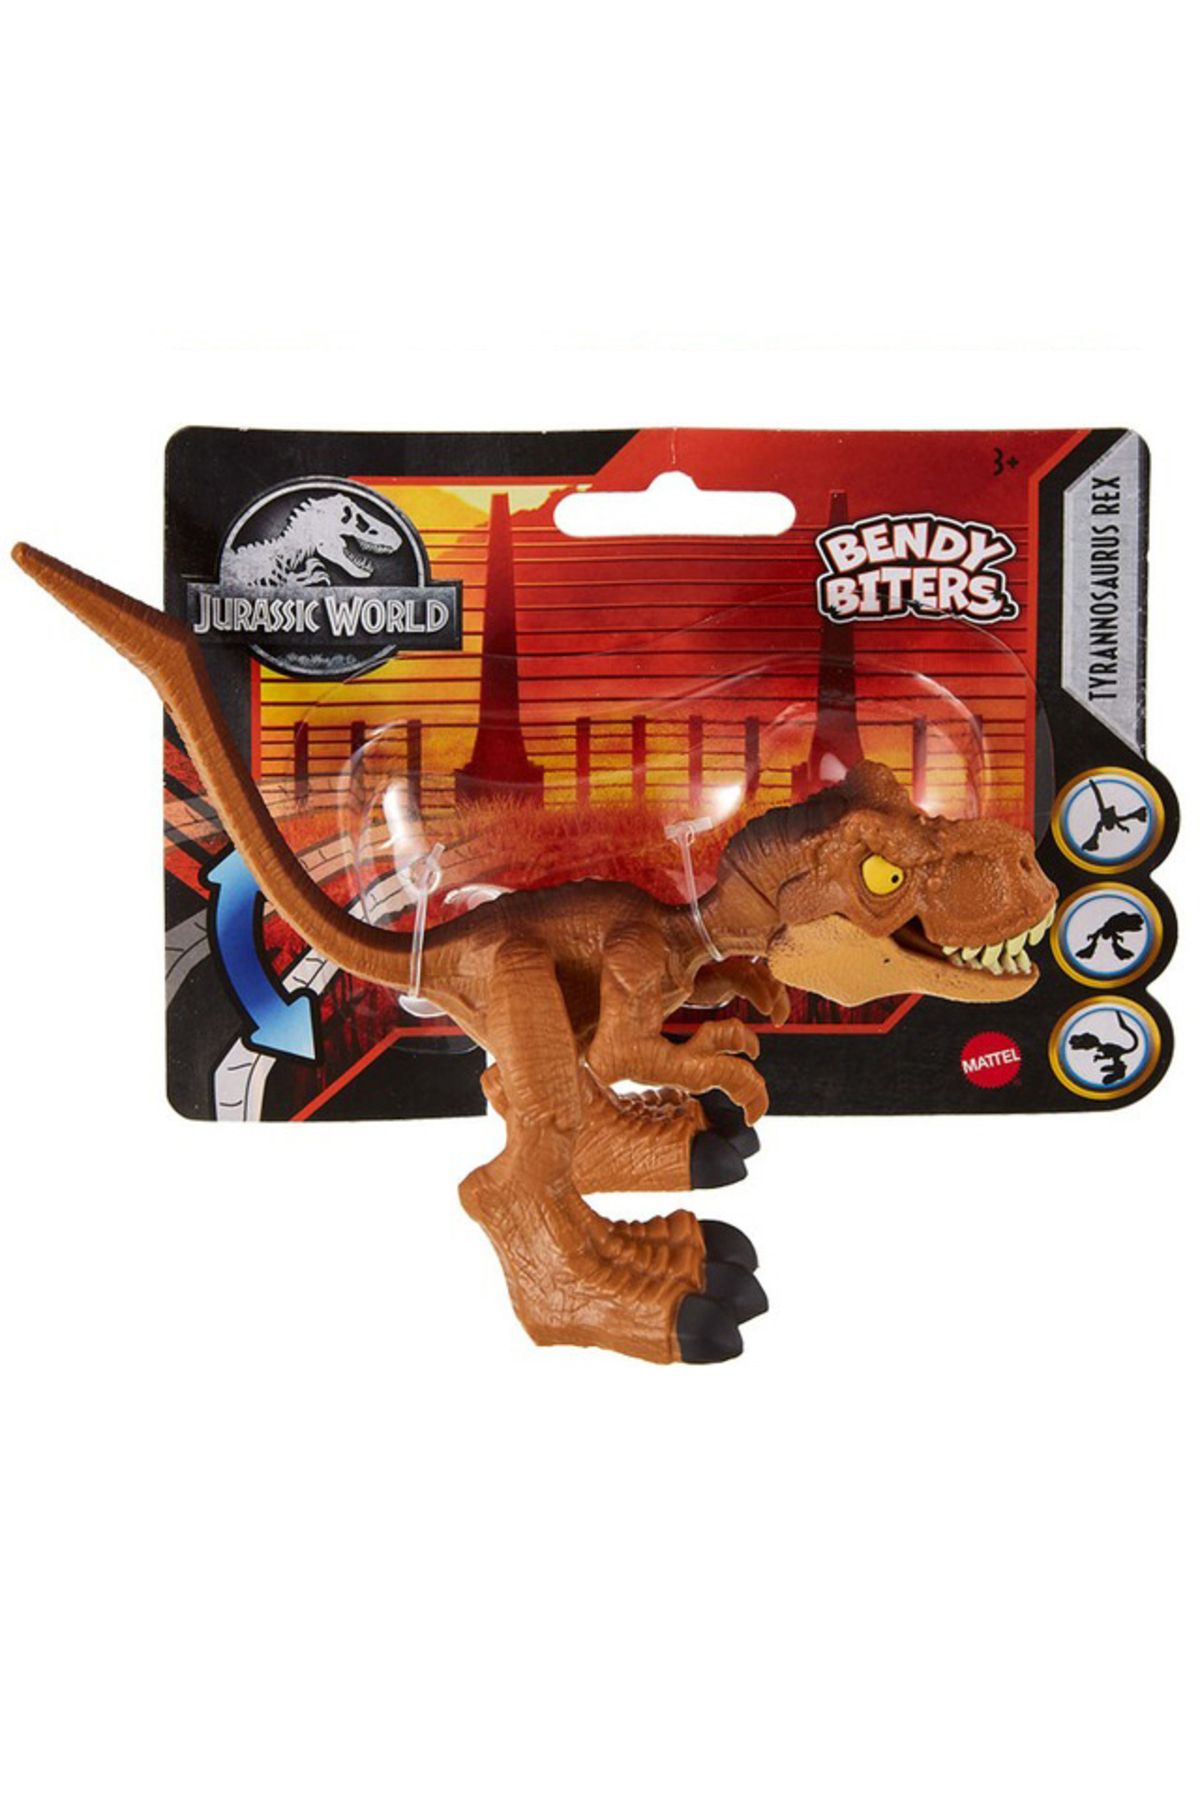 Jurassic World Dinozor Figür Tyrannosaurus Rex Bendy Biters Mattel Lisanslı Oyuncak